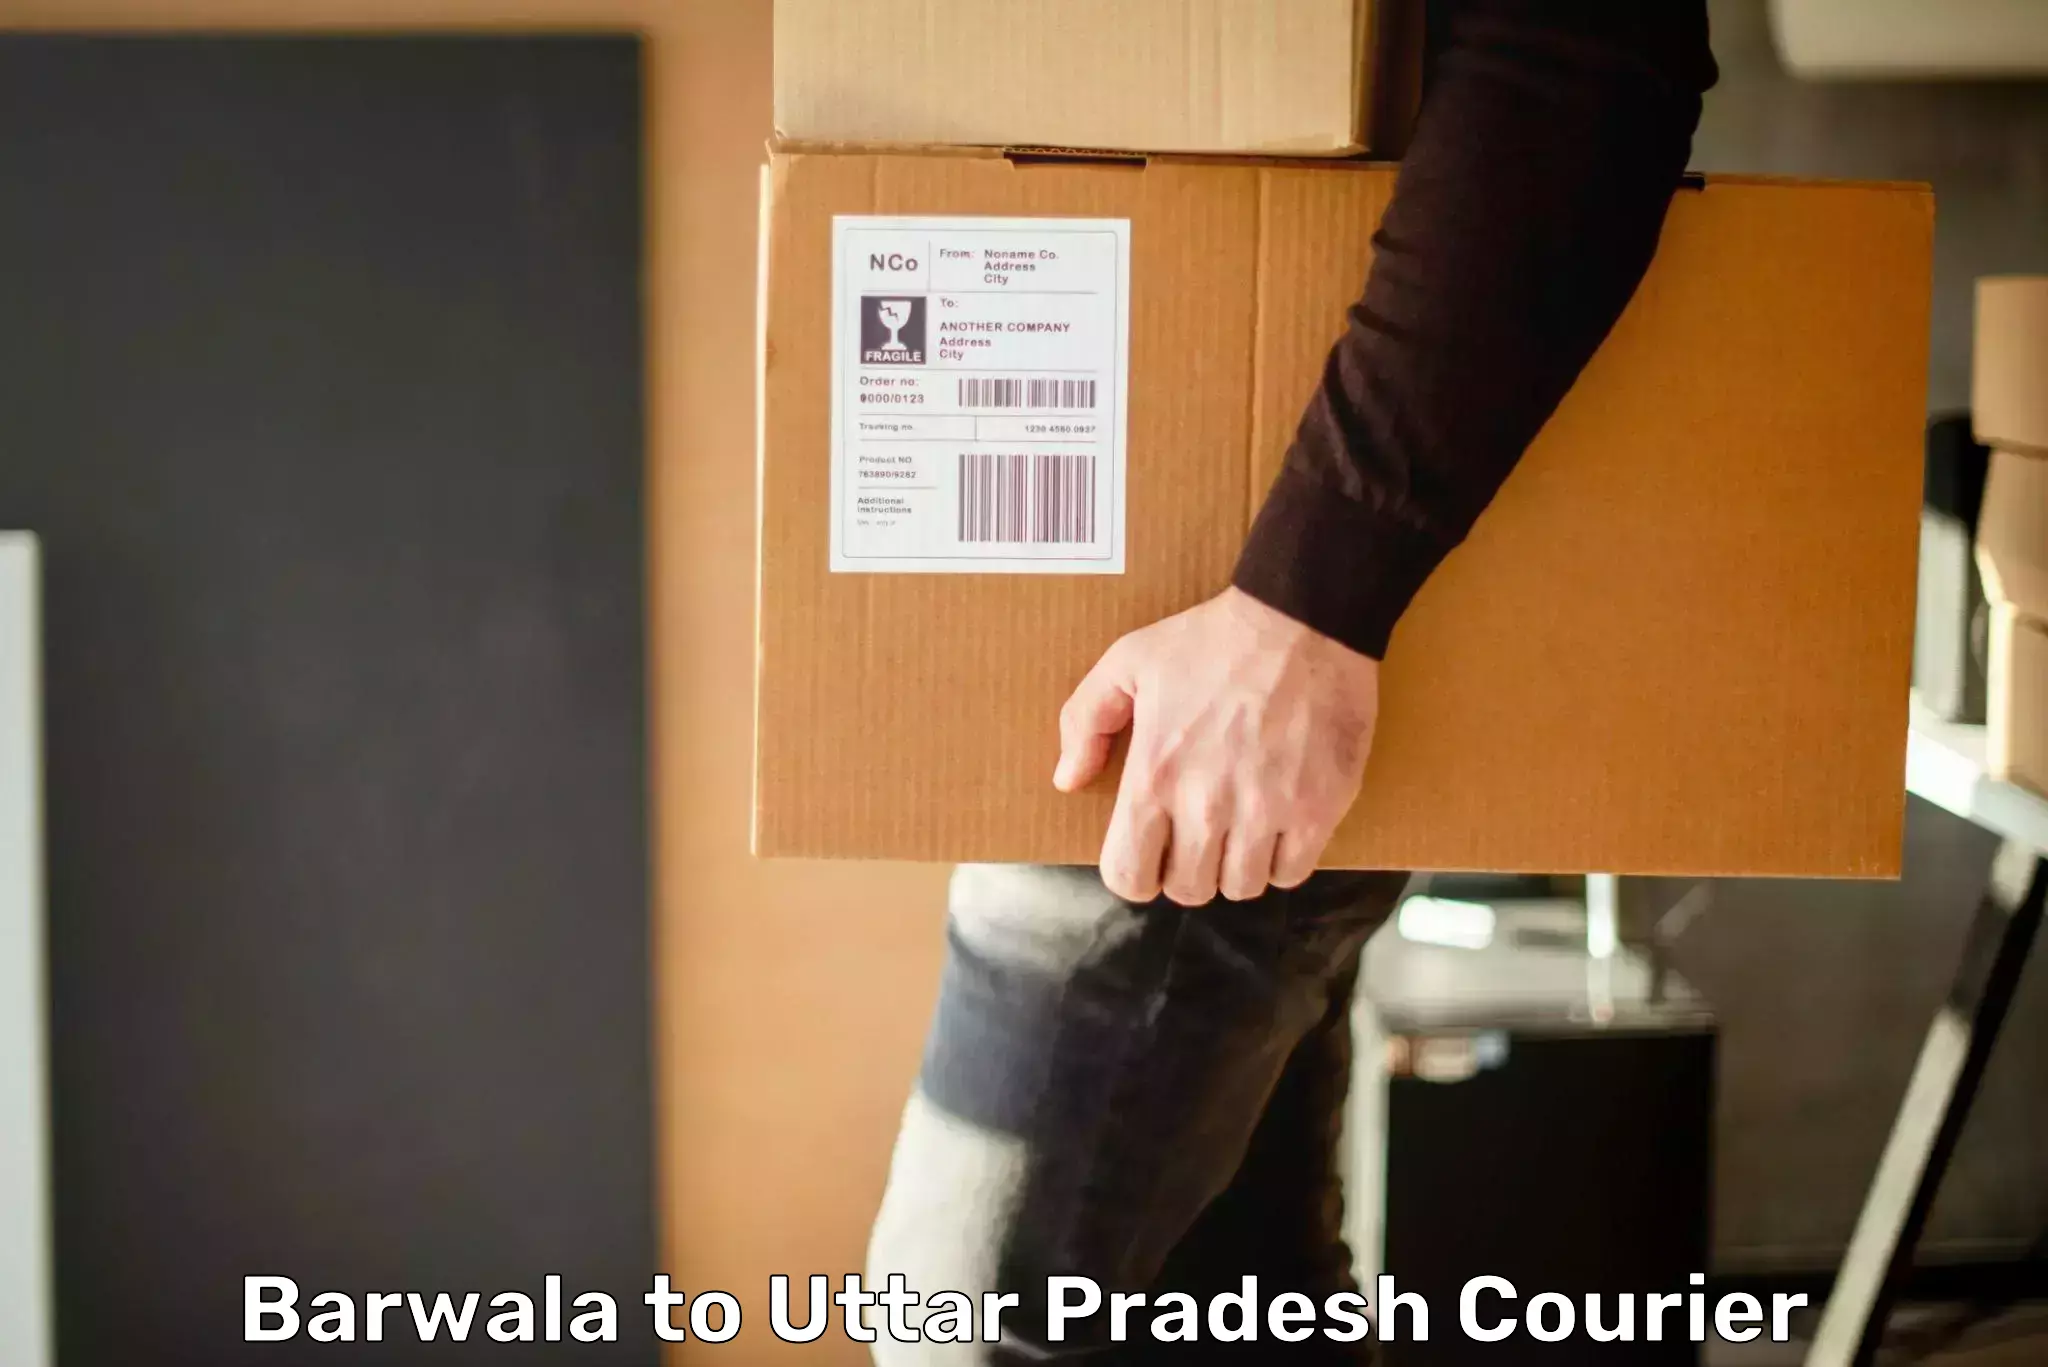 Global courier networks Barwala to Varanasi